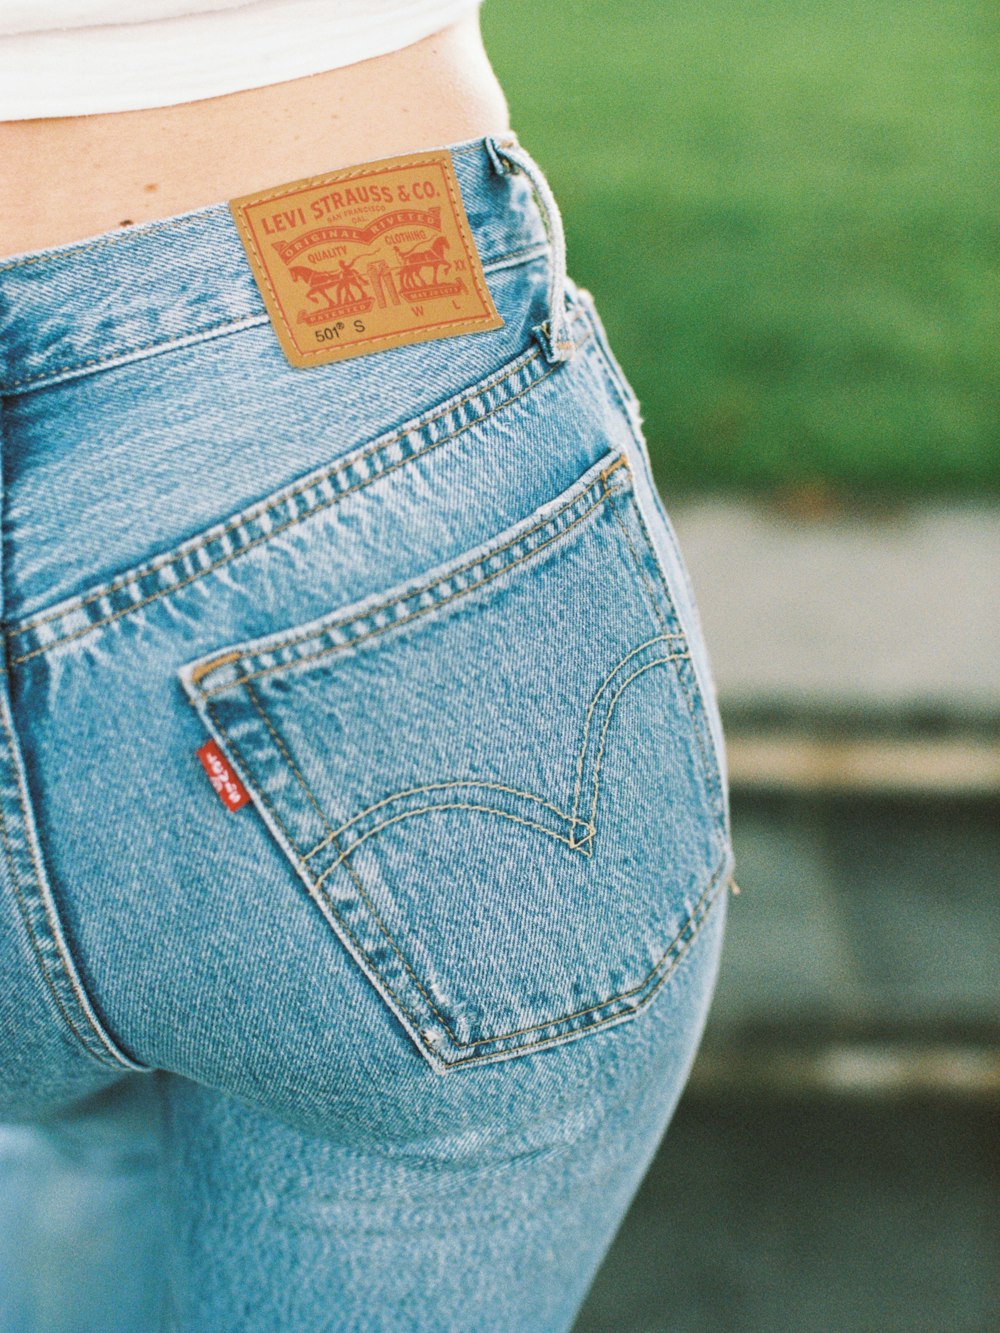 Levis Jeans Pictures | Download Free Images on Unsplash